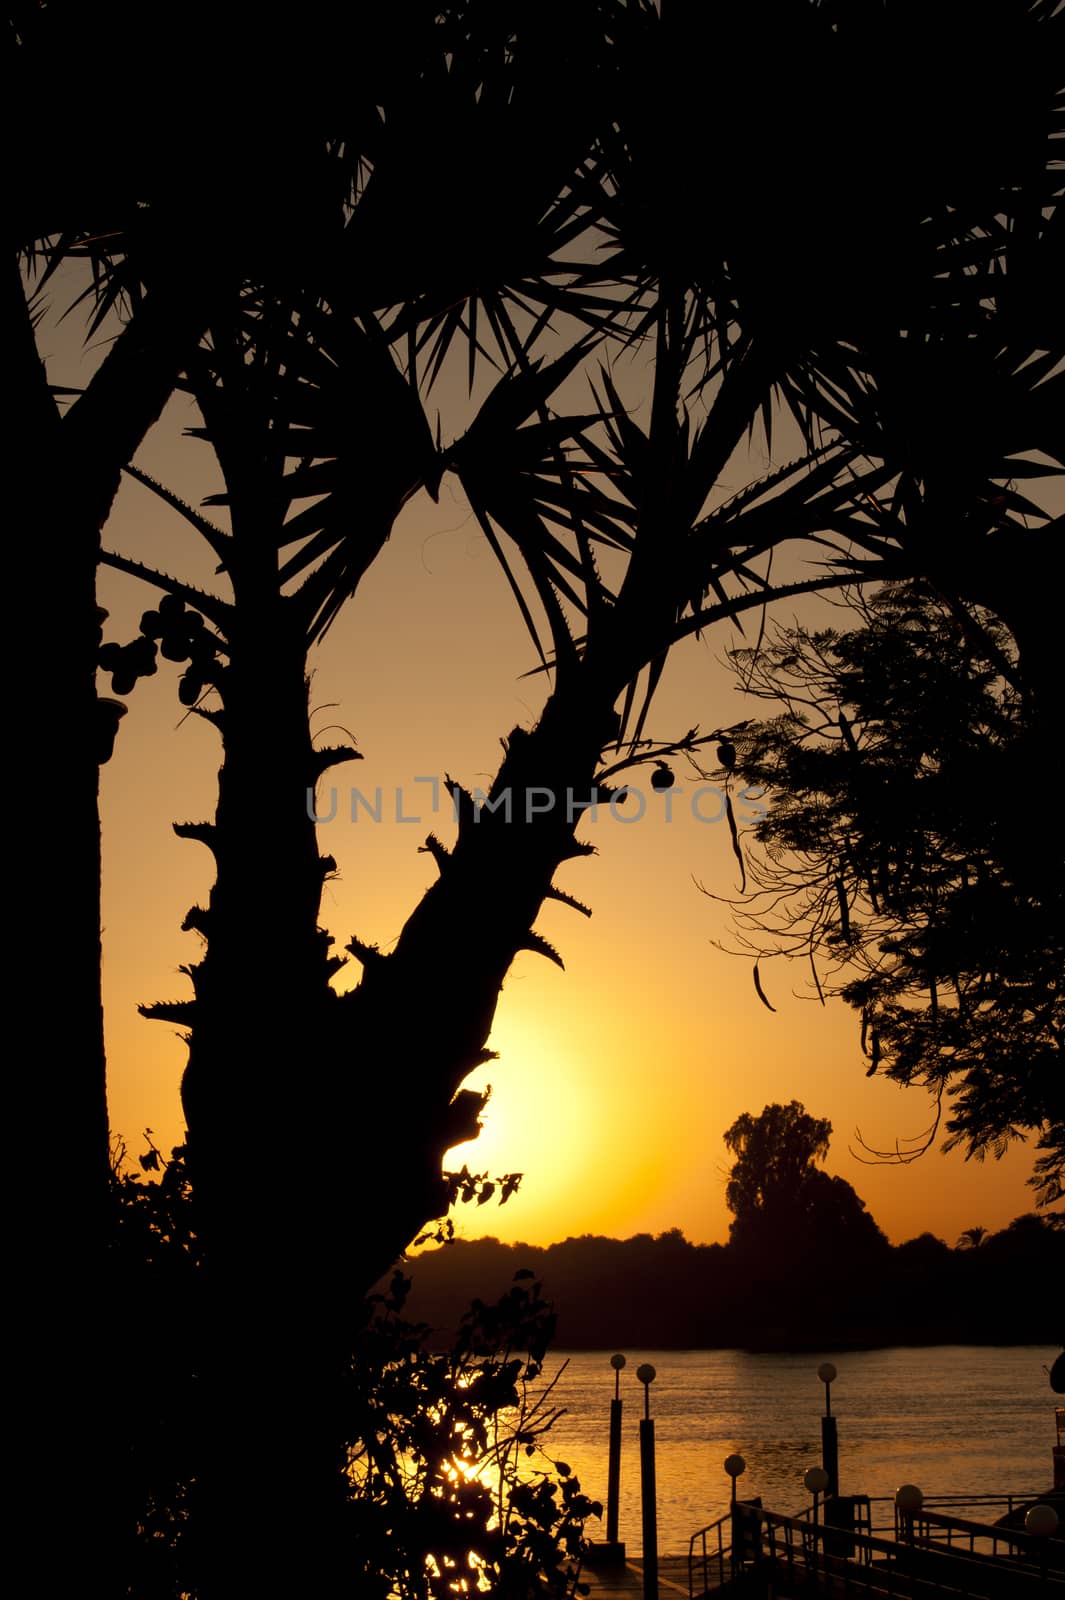 Sunset through palm trees by paulvinten